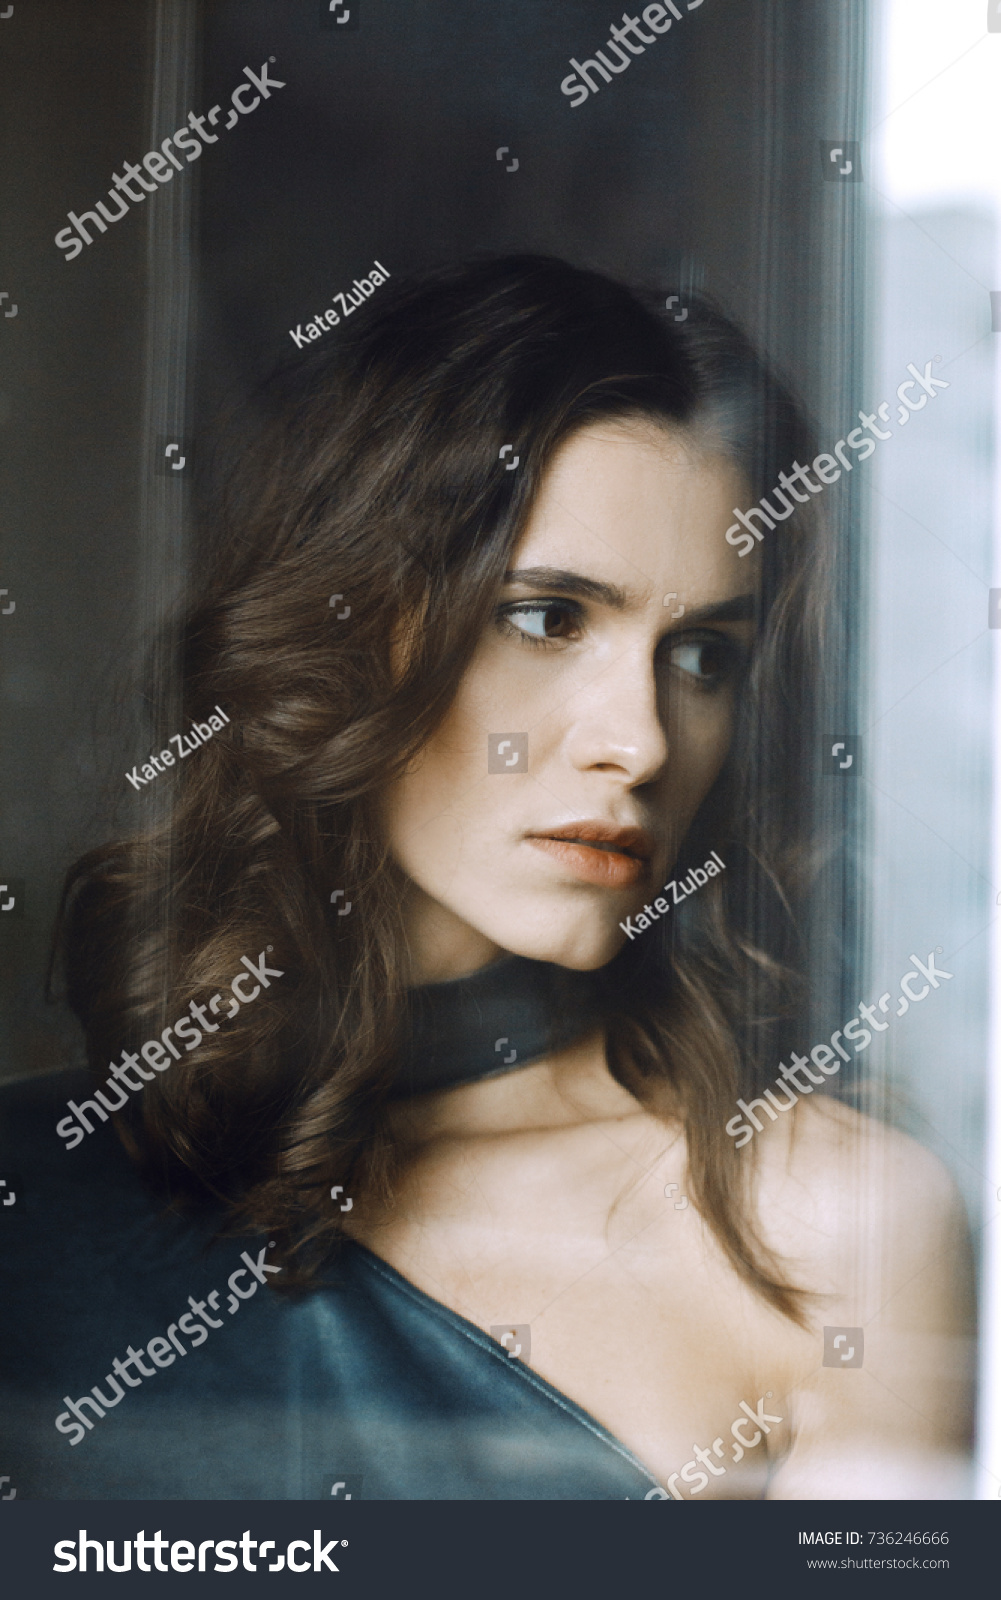 Portrait Beautiful Woman She Has Dark Stock Image Download Now